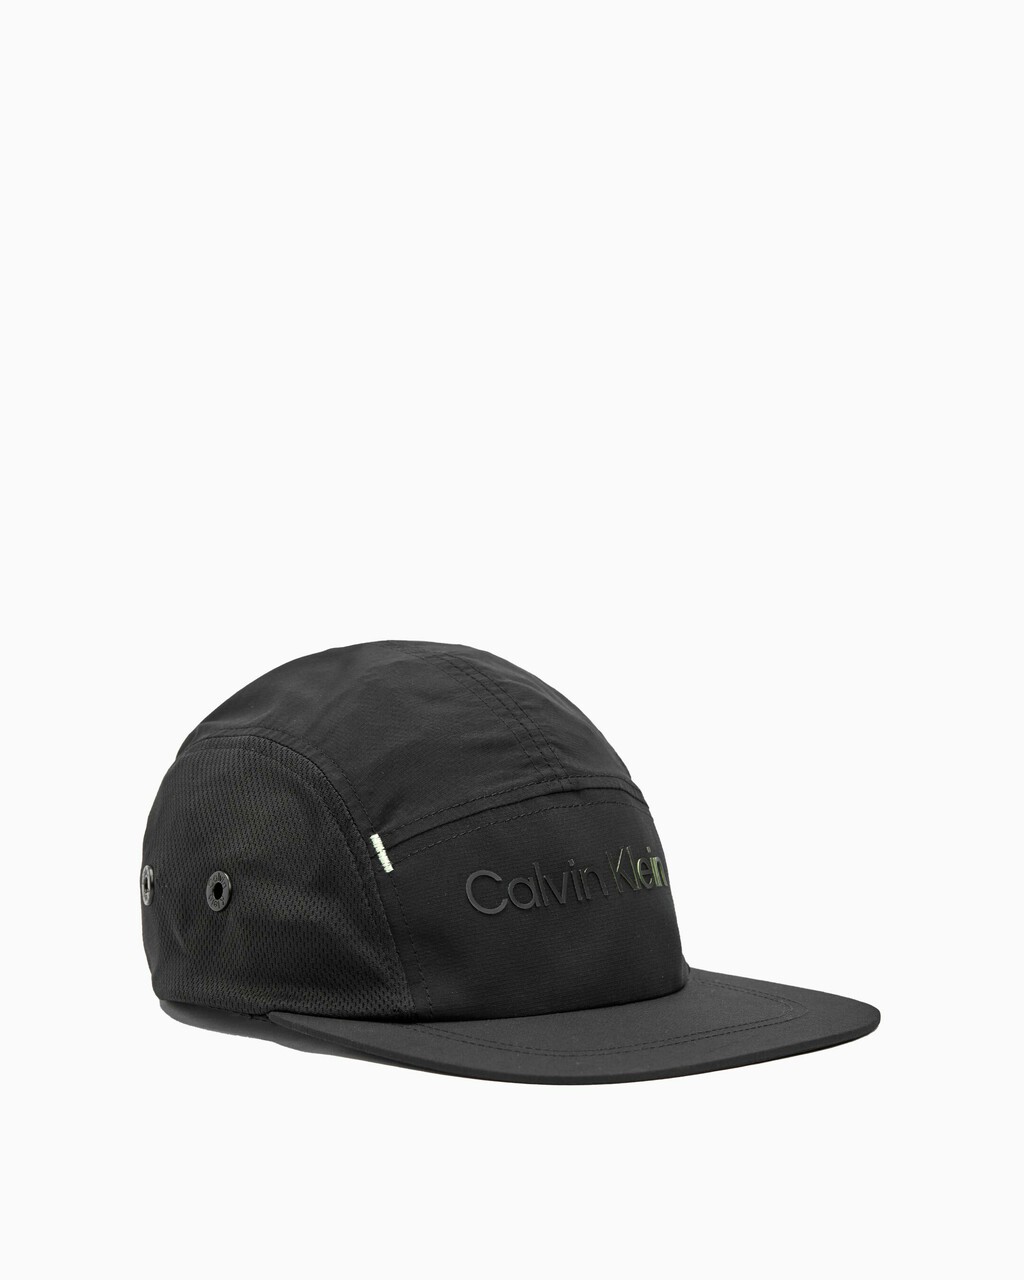 MODULAR 可擴展棒球帽, BLACK, hi-res